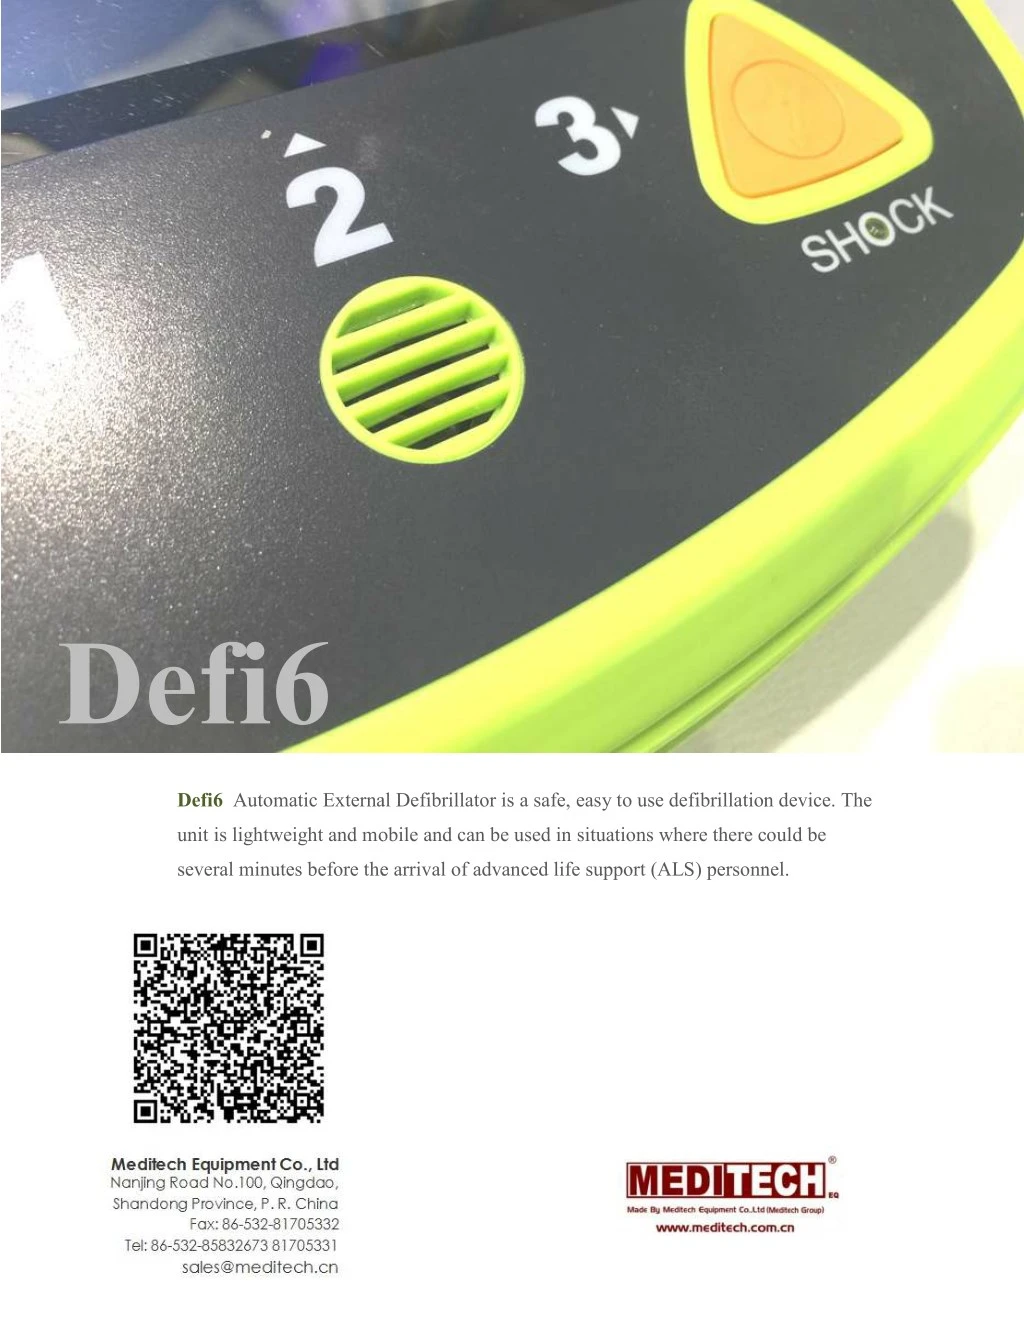 defi6 defi6 automatic external defibrillator